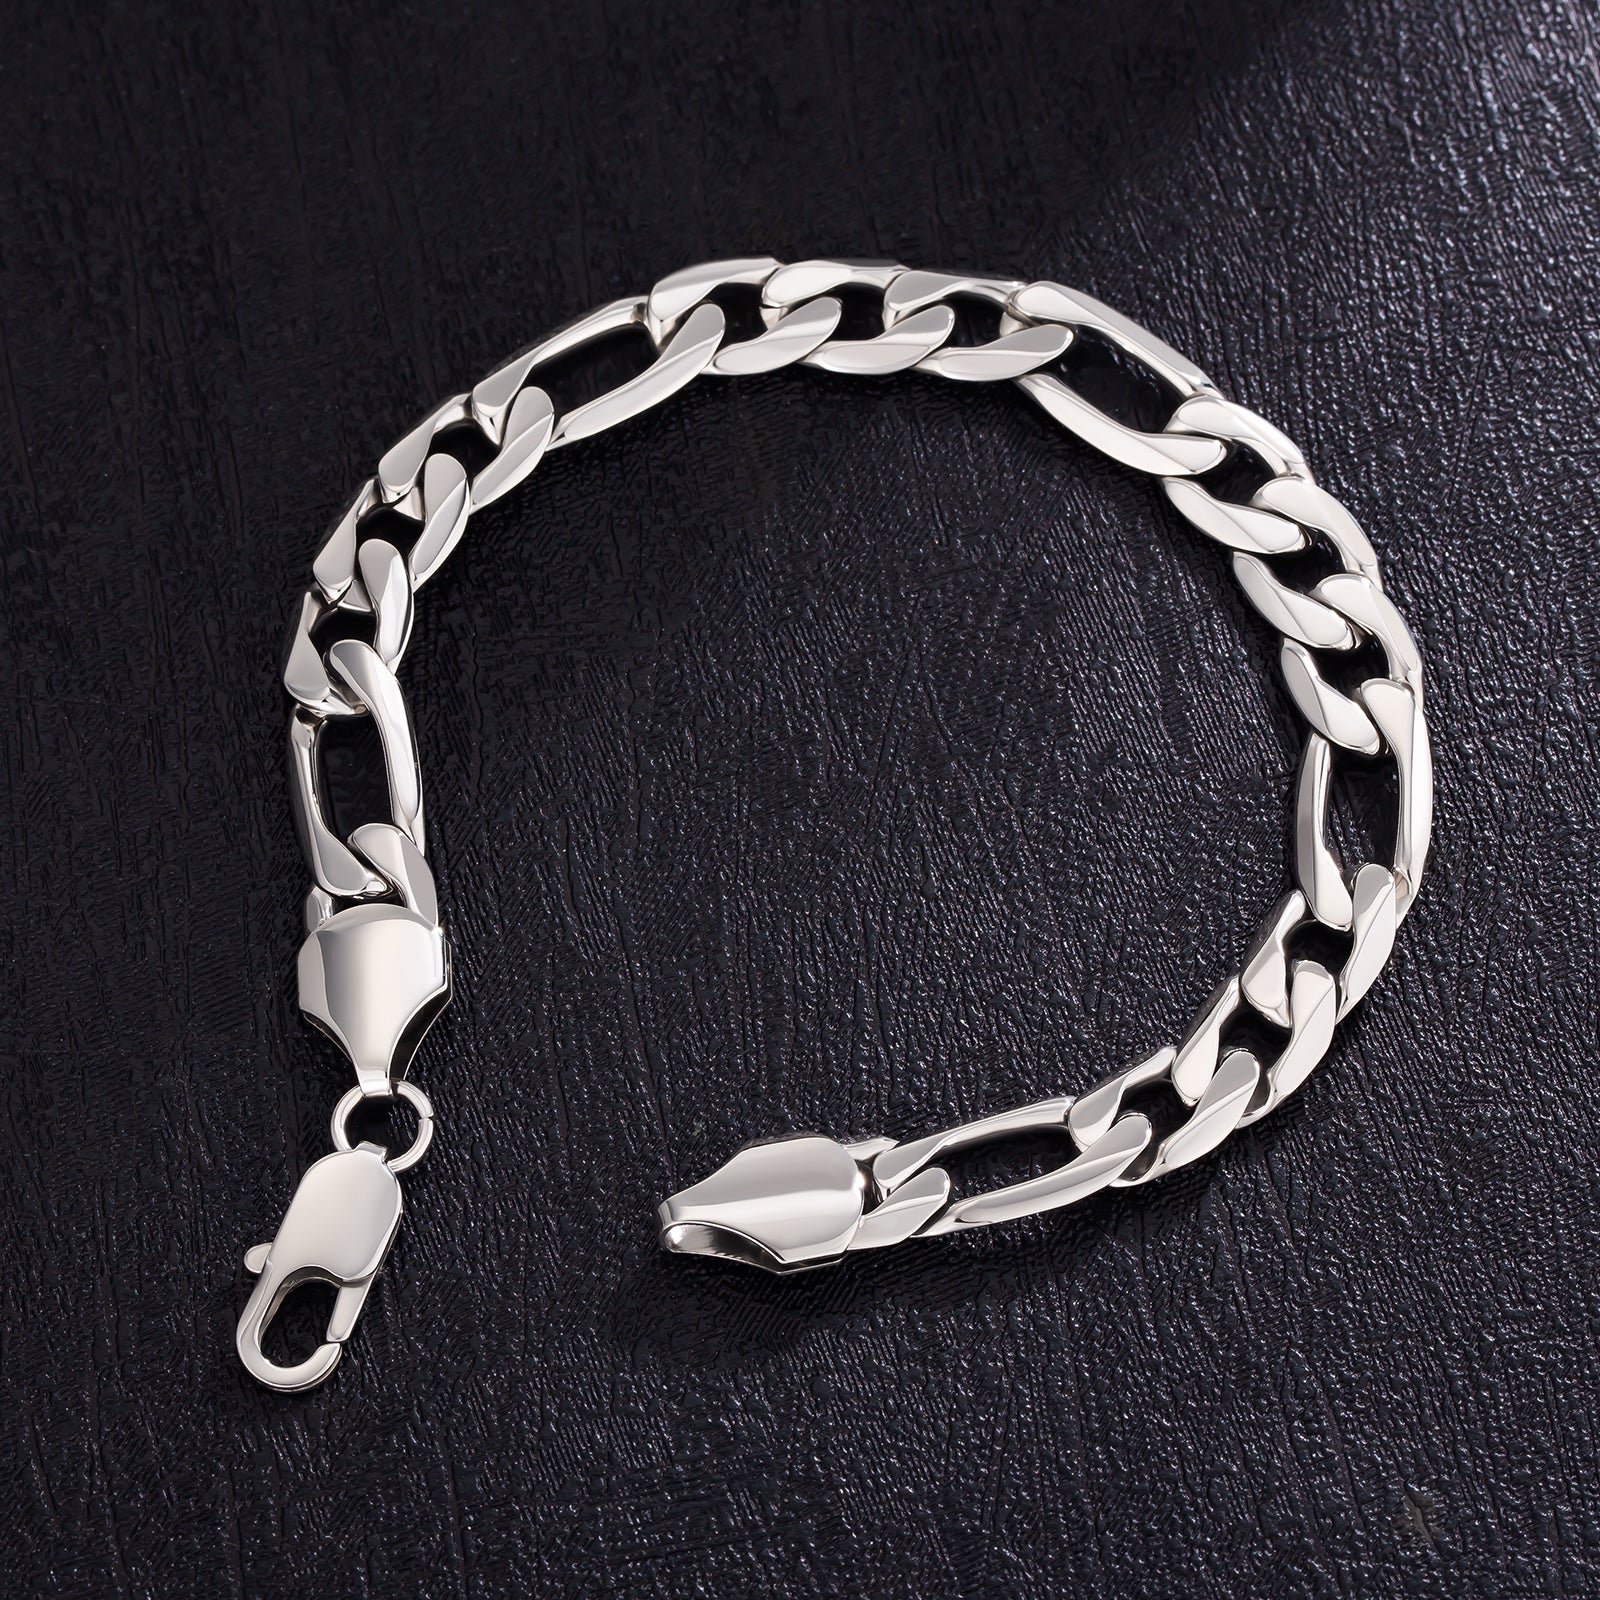 Handmade in Taxco, Mexico. 925 Sterling Silver Bracelet. 35g- 42g,  7.5